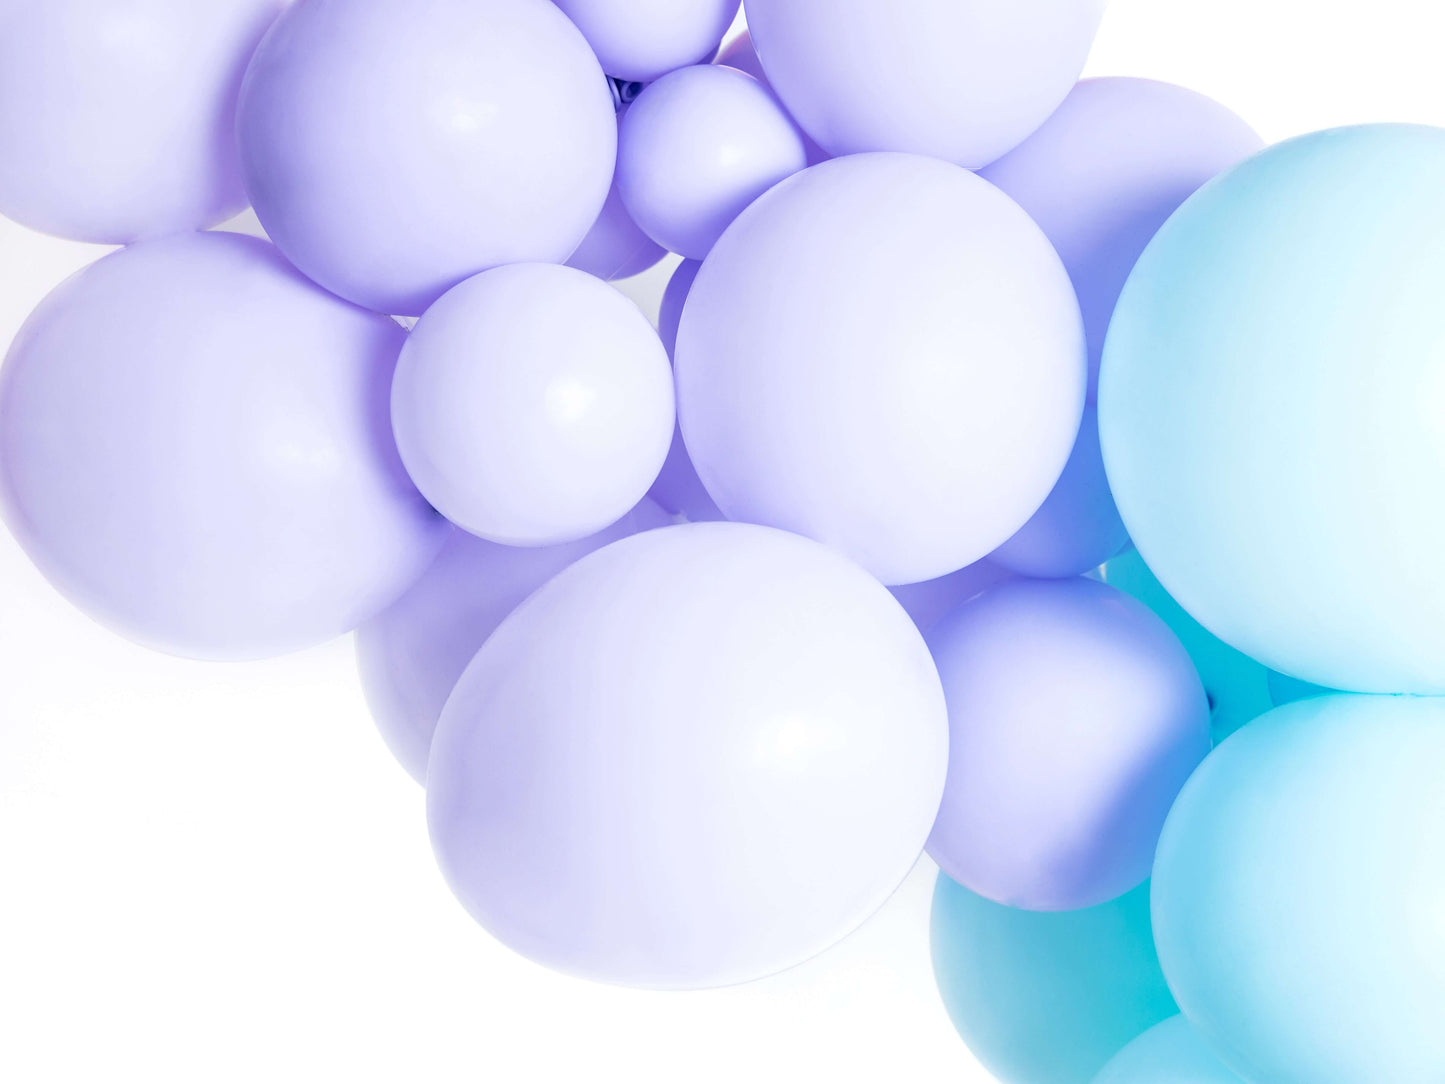 Pastel Lilac Balloons (30cm)